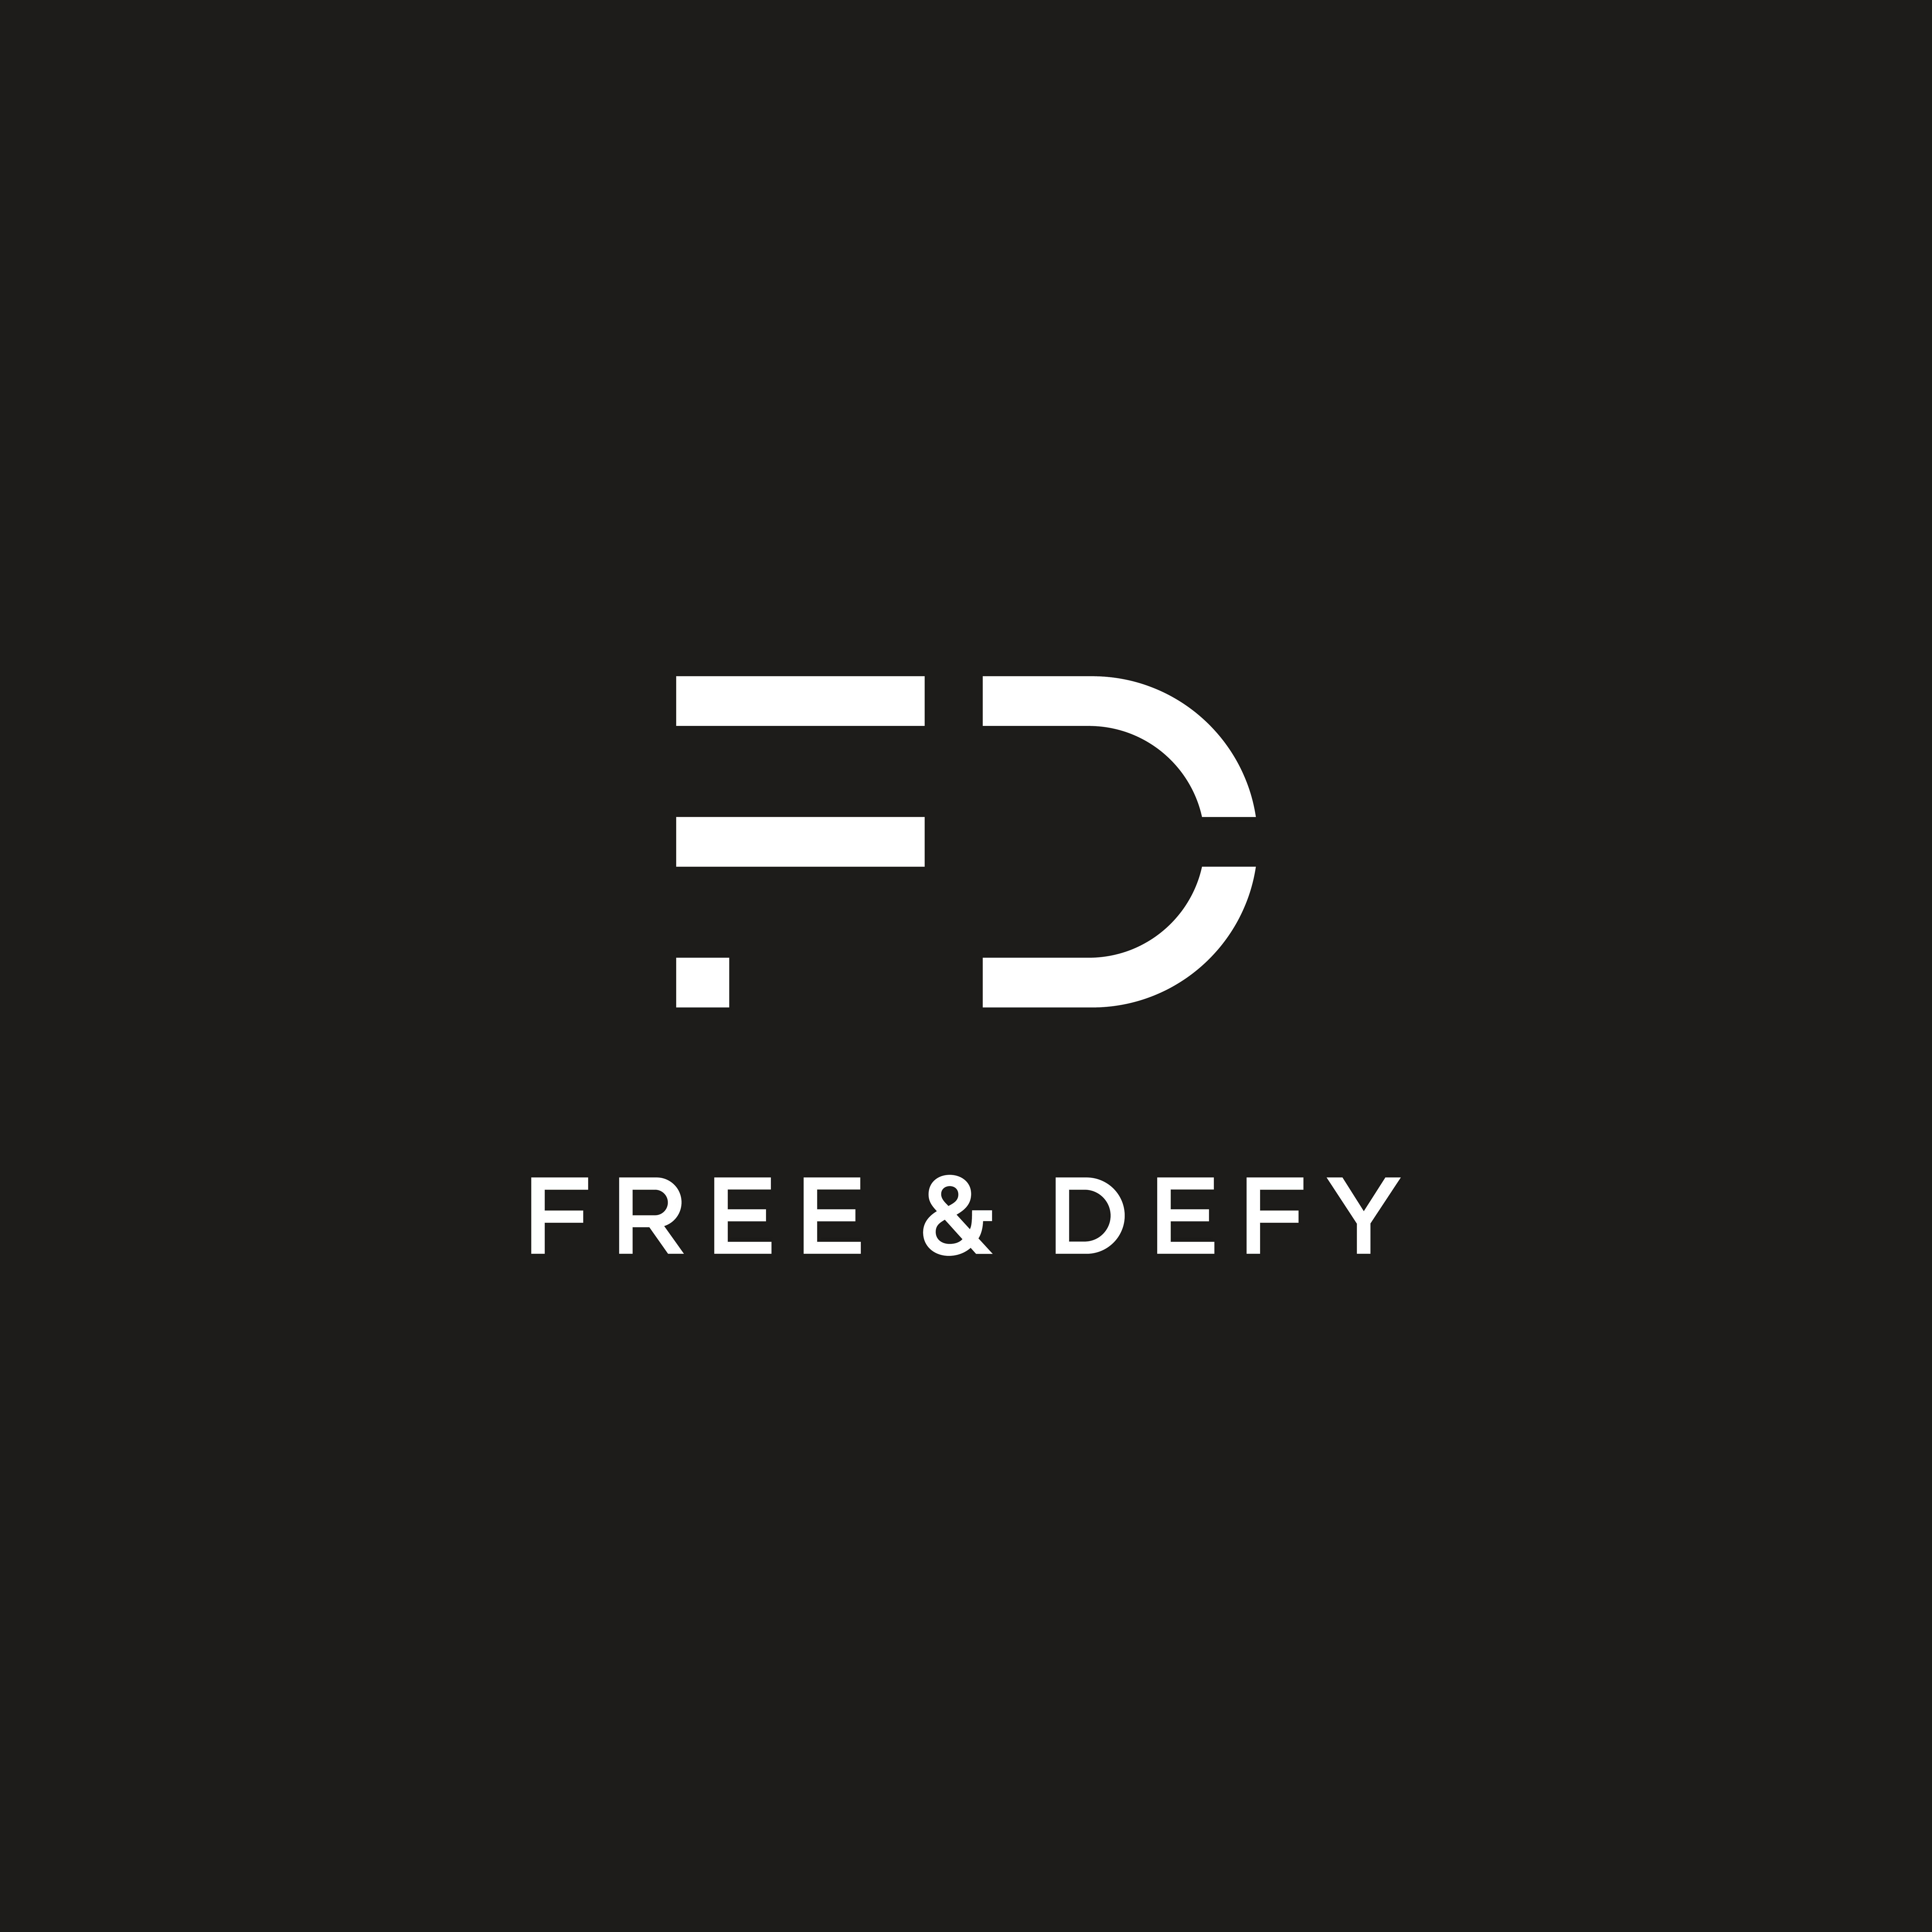 FREE & DEFY